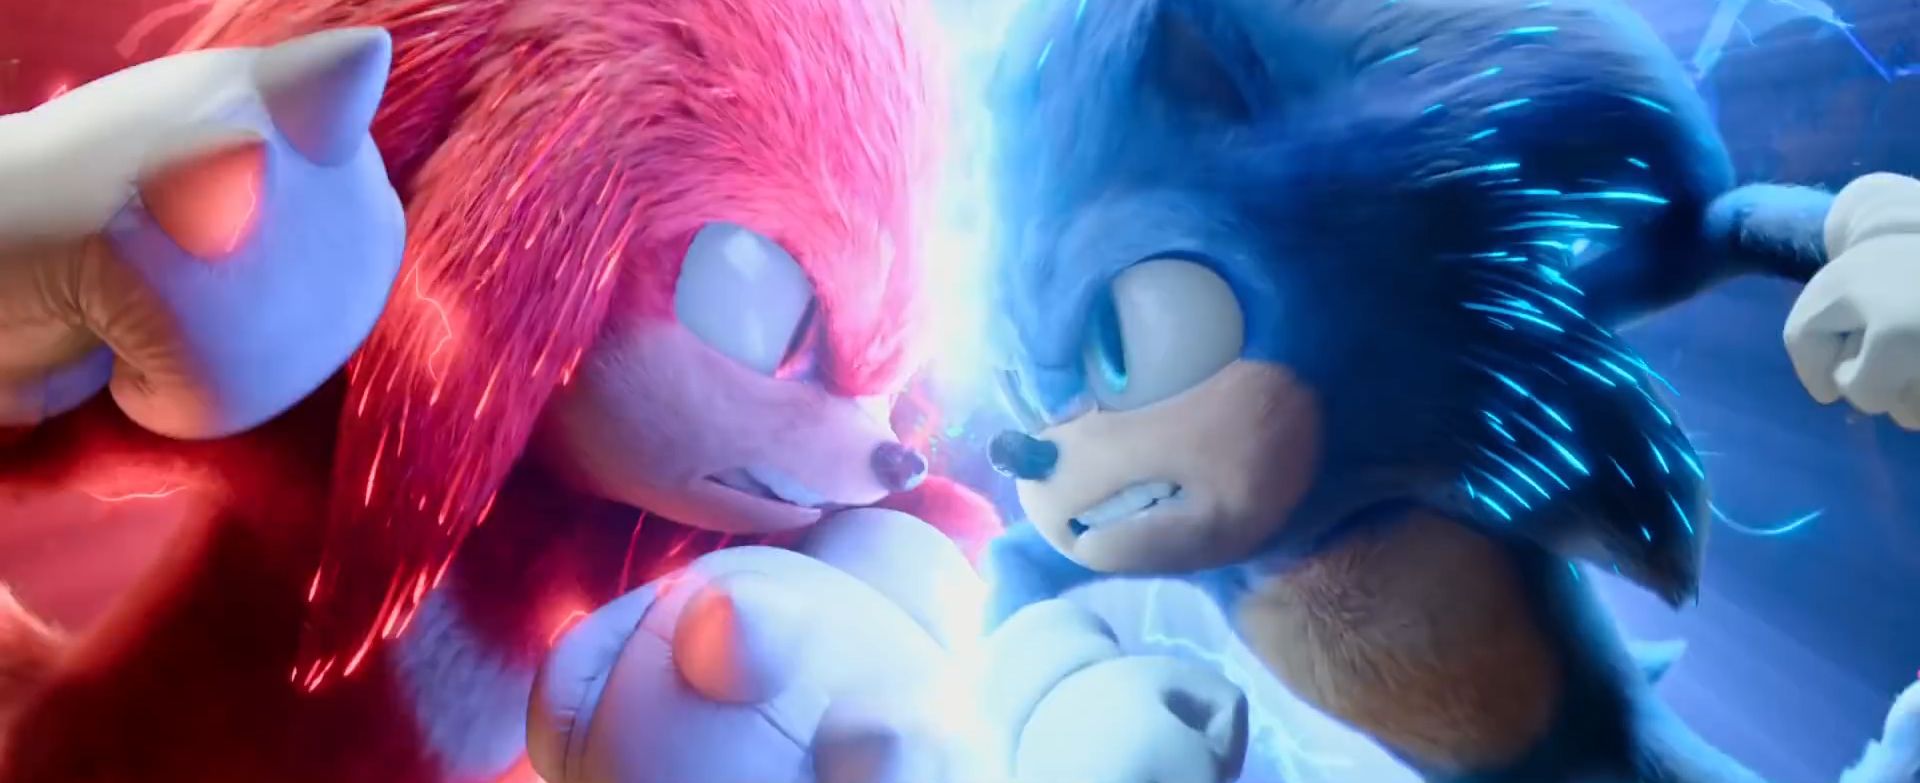 Sonic the Hedgehog 2  Watch Full Film Online